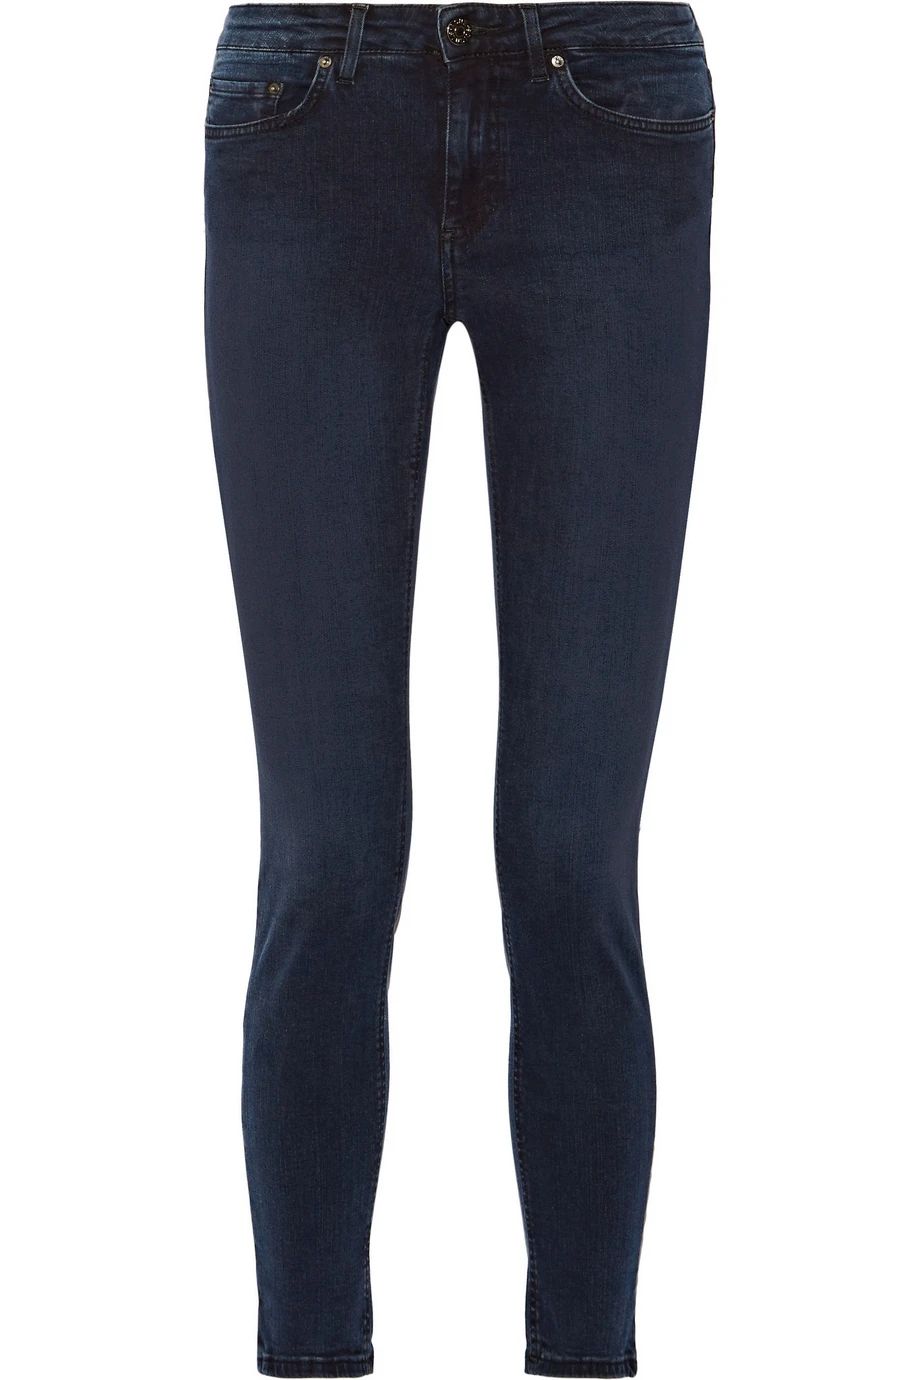 Acne Studios Skin 5 Pocket Deep mid-rise skinny jeans, Women's, Size: 24 | NET-A-PORTER (UK & EU)